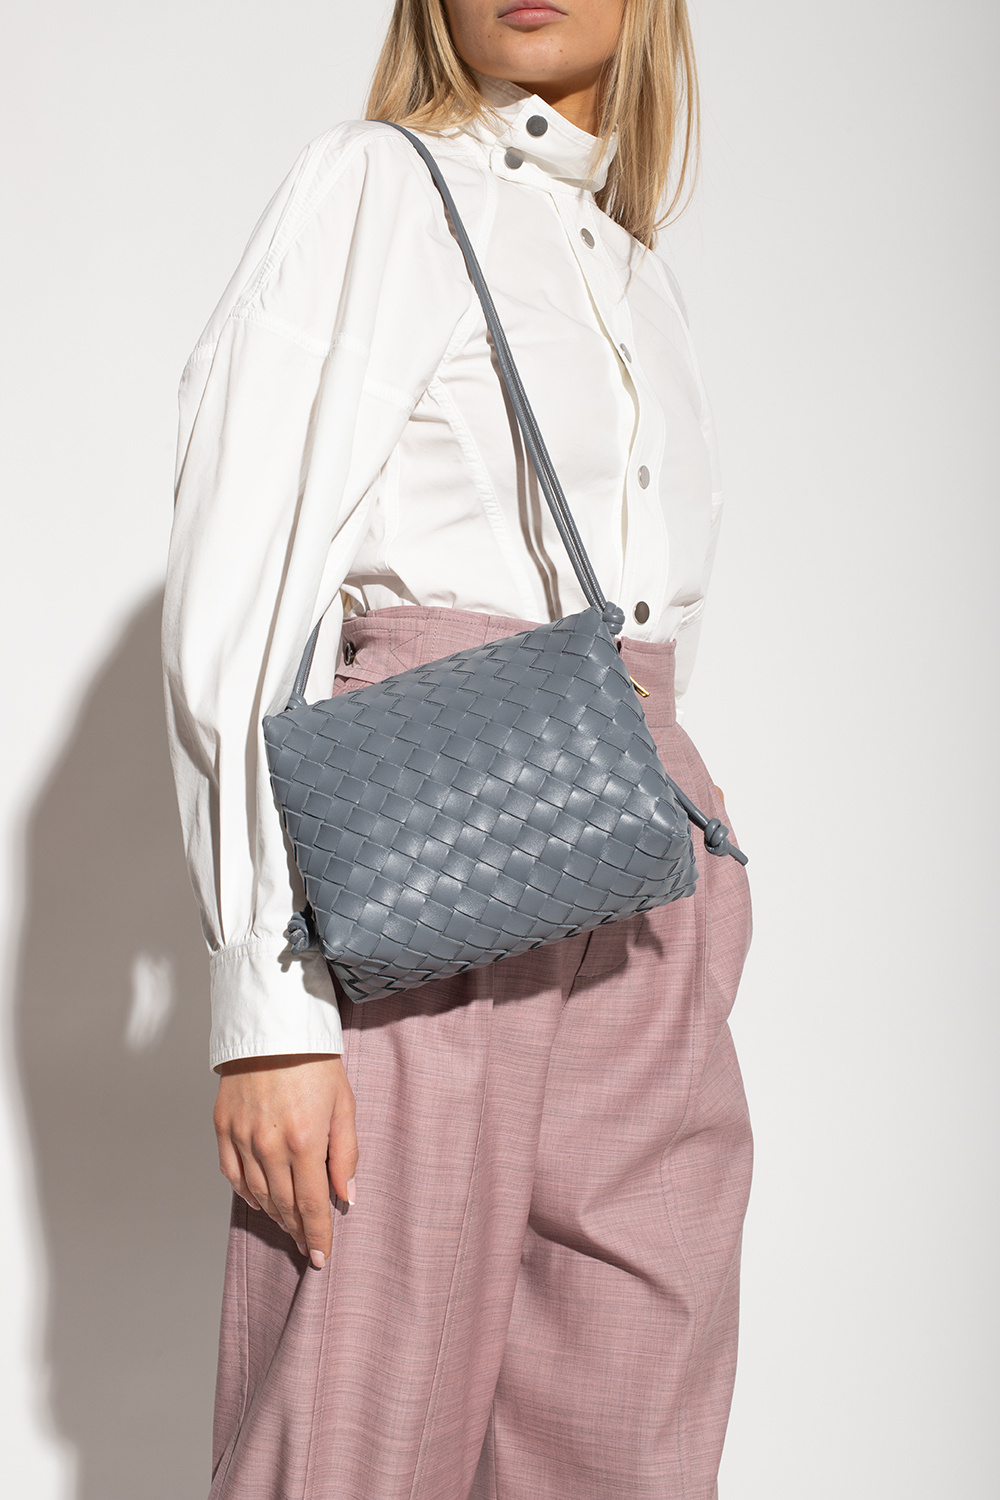 Bottega Veneta Women's Small Loop Bag